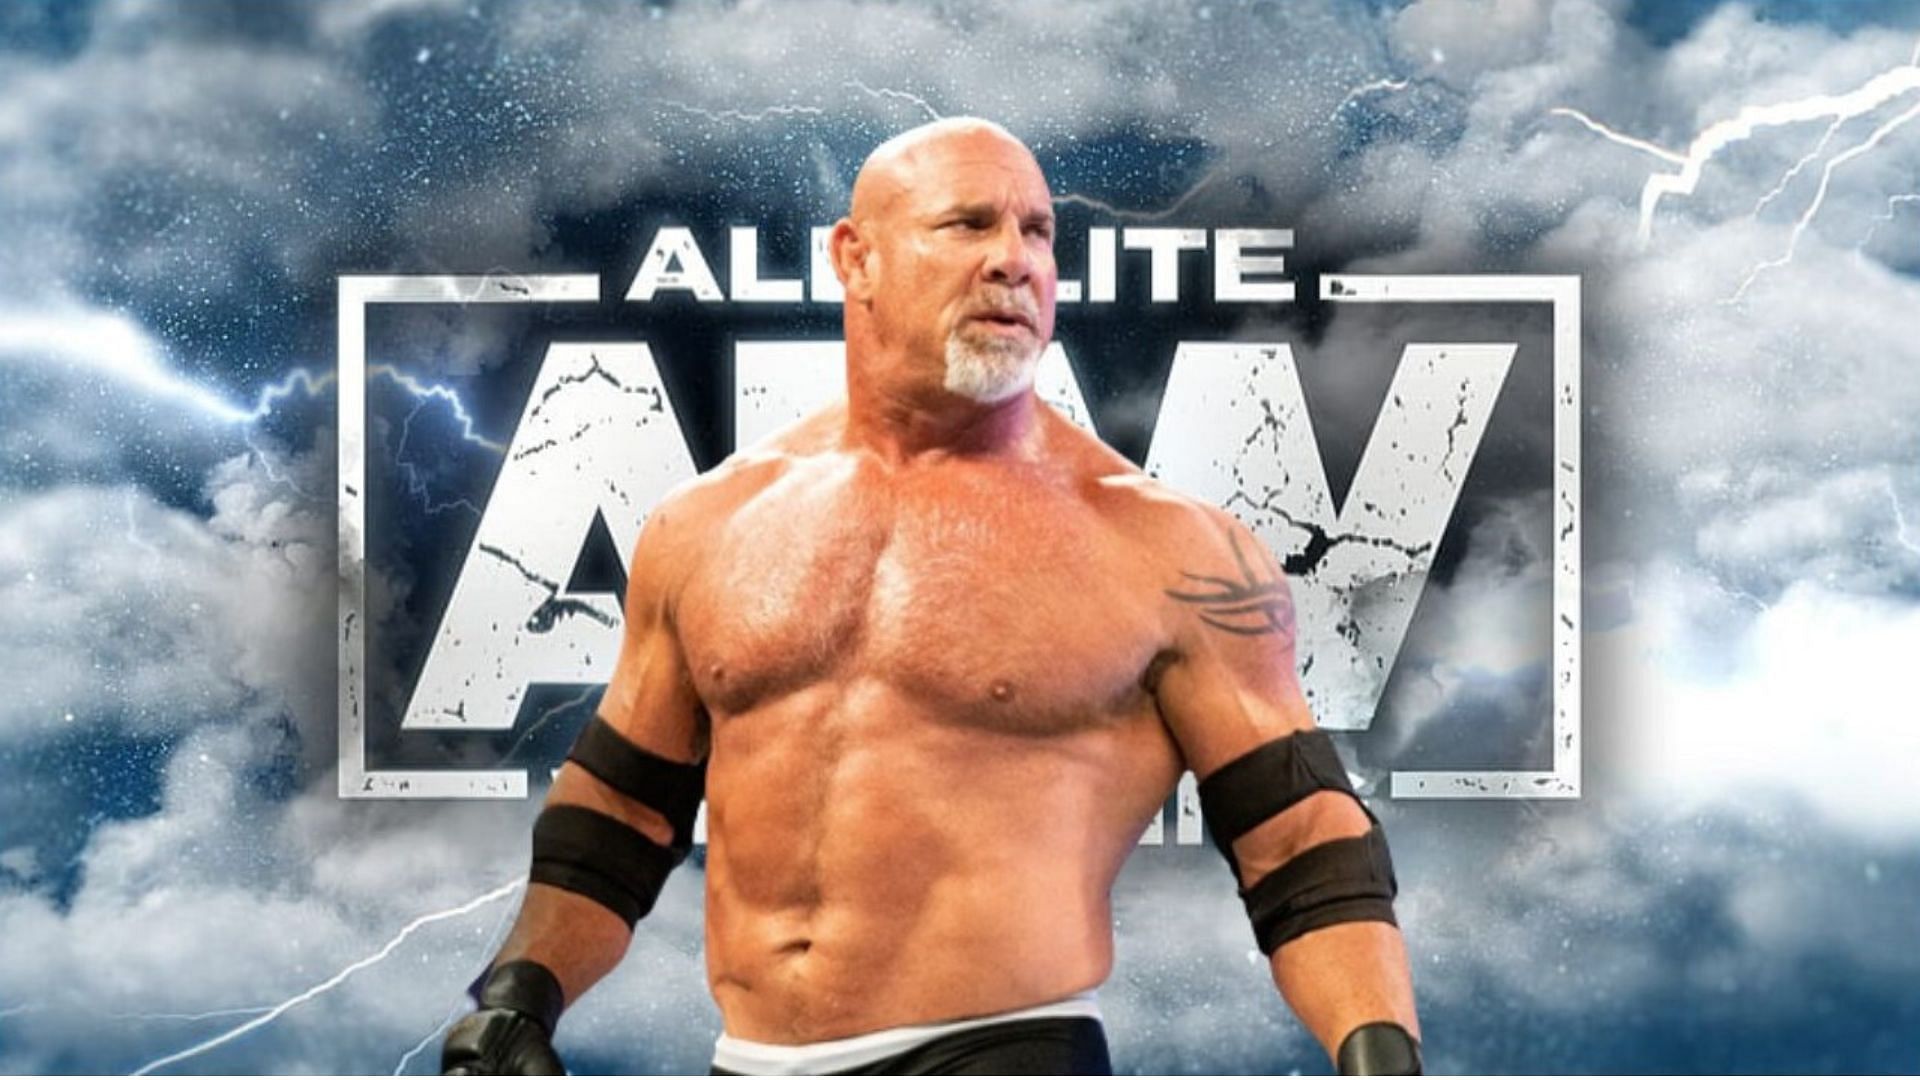 Will Goldberg eventually join AEW?